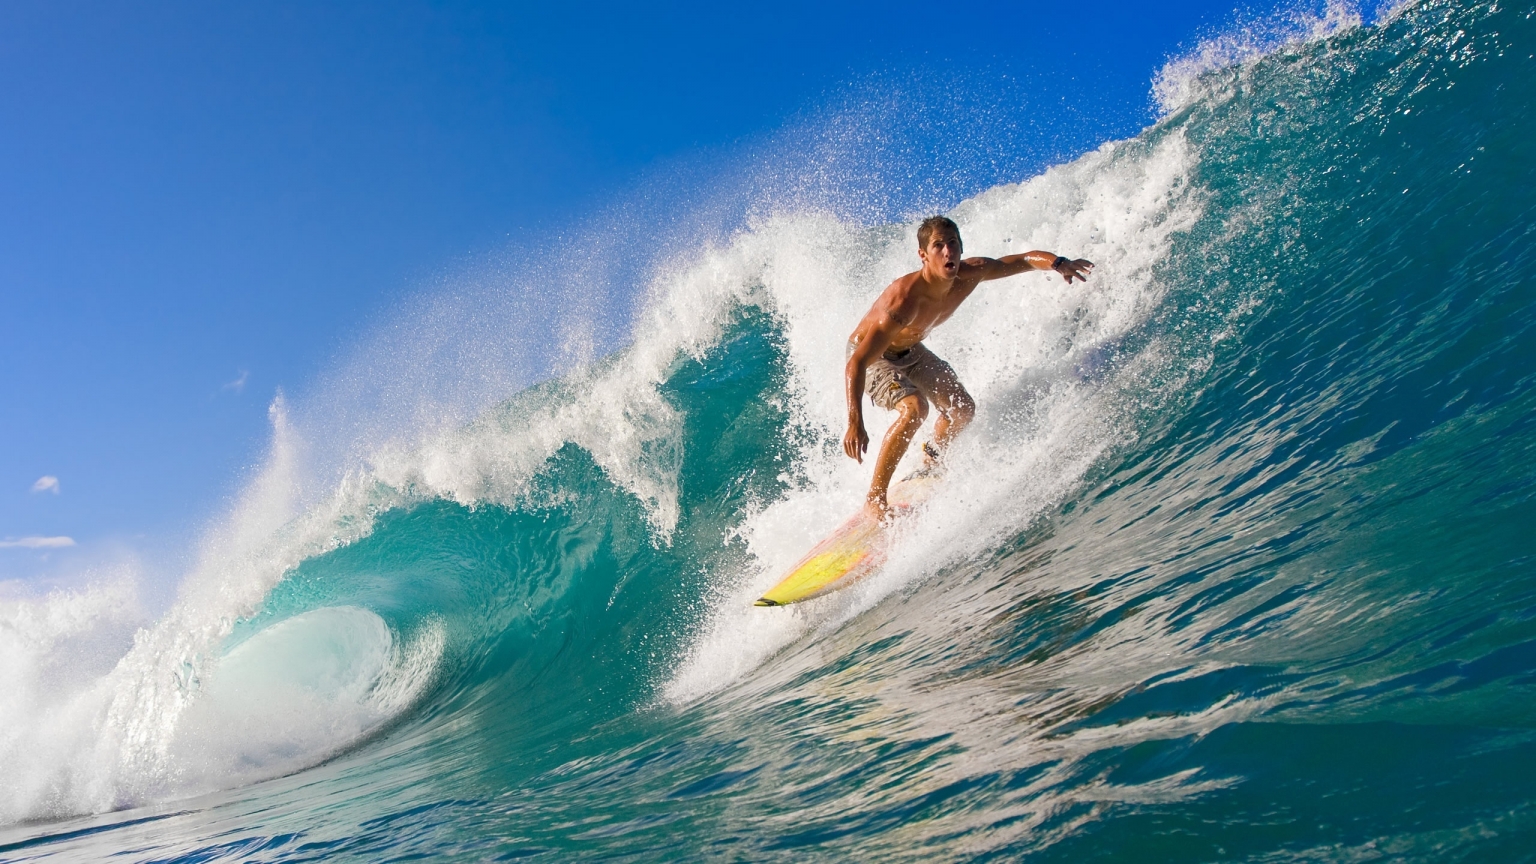 Summer Surf for 1536 x 864 HDTV resolution